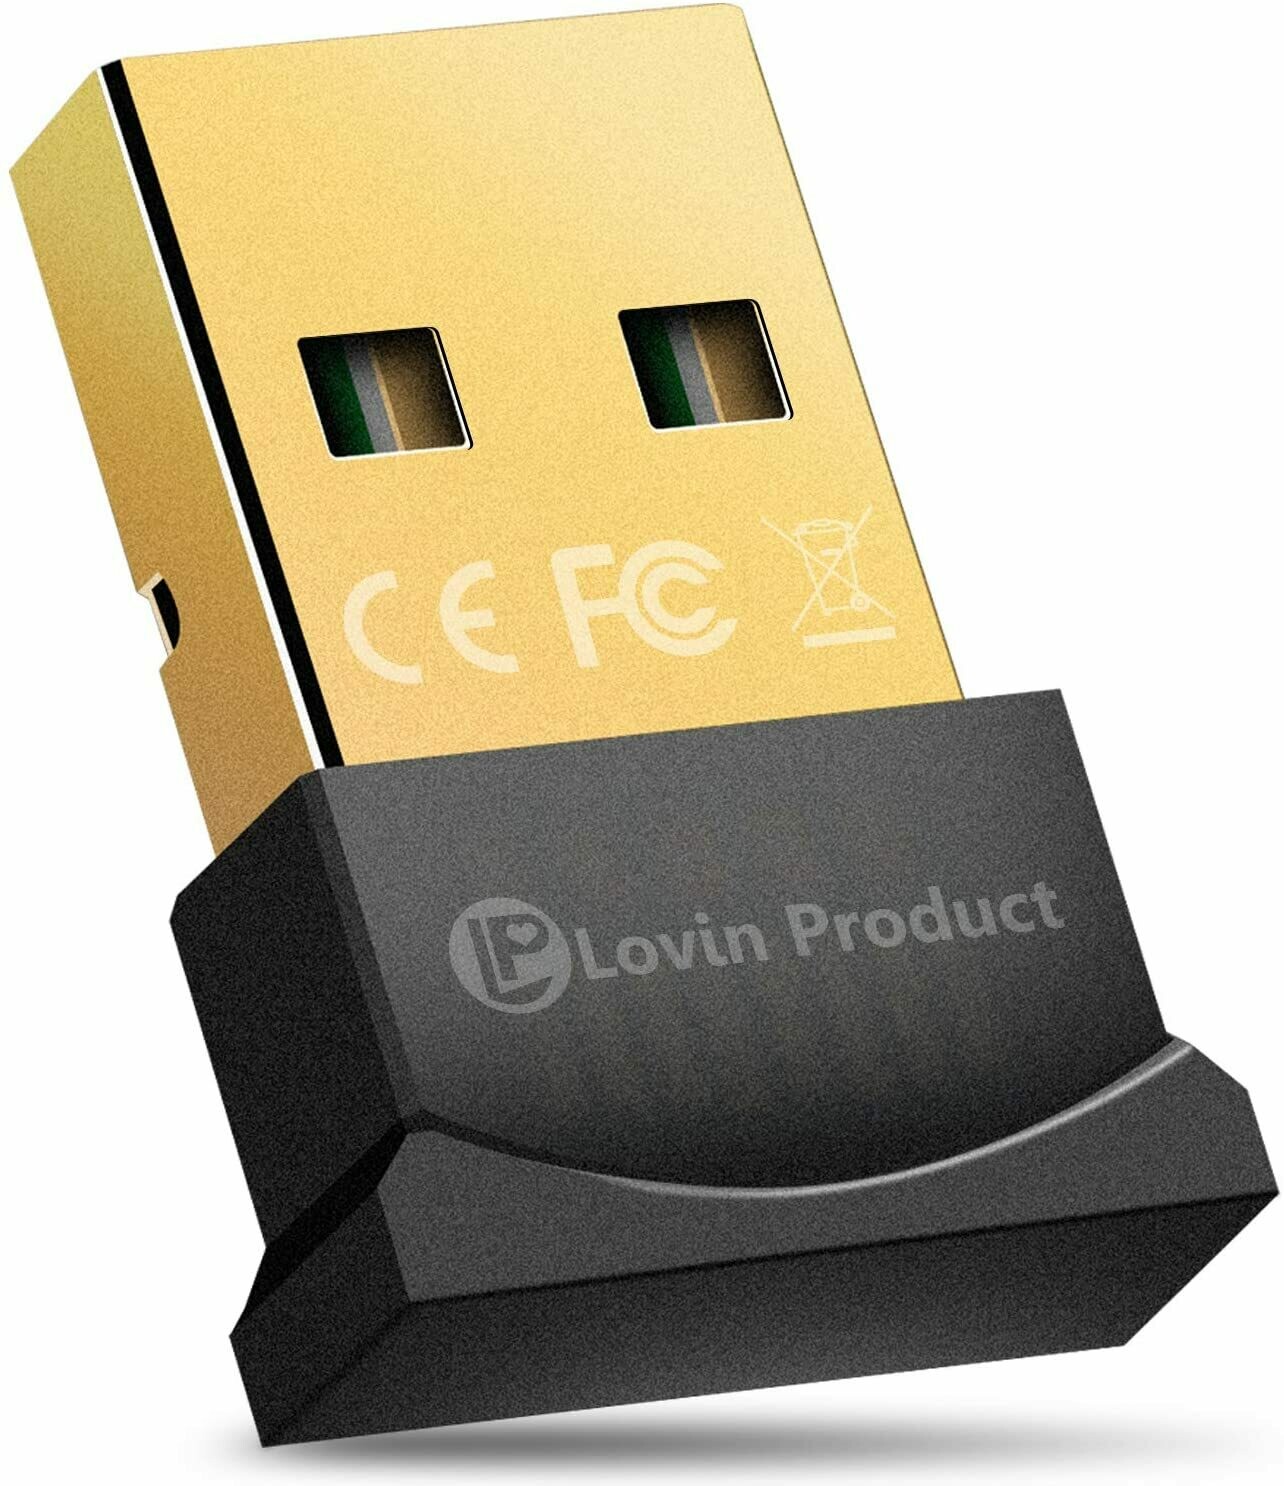 Lovin Product Bluetooth 5.0 USB Adapter - USB Bluetooth 5.0 Wireless EDR  Micro Adapter - For Windows 10,8.1/8,7,Vista,XP,32/64Bit for Desktop, Laptop